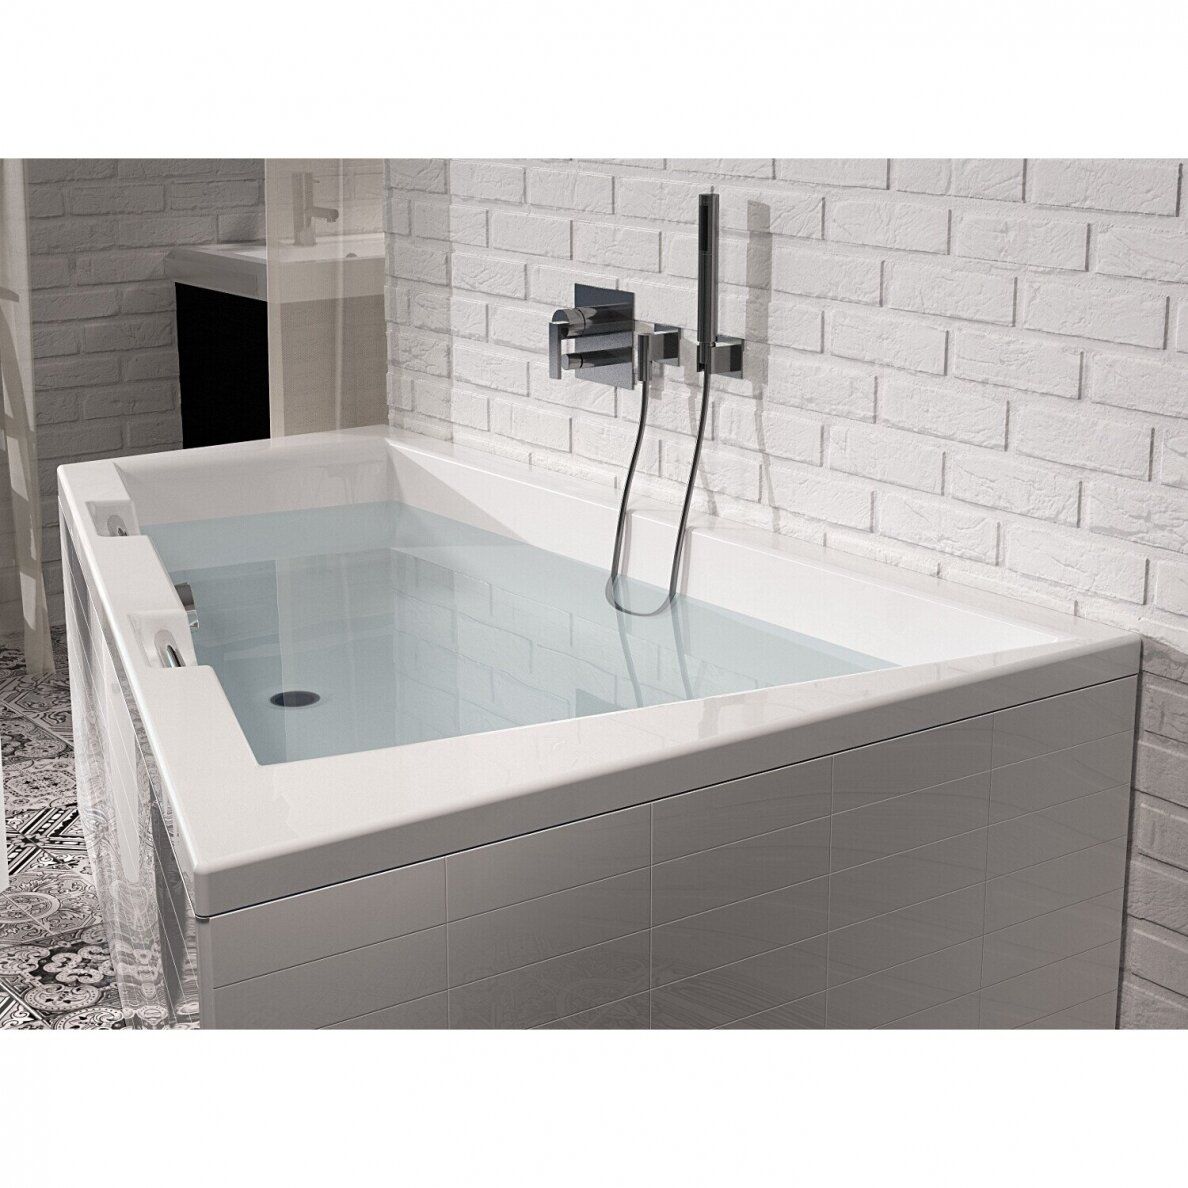 Akrilinė vonia Riho Doppio 180x130 cm, balta, kairė, B034001005